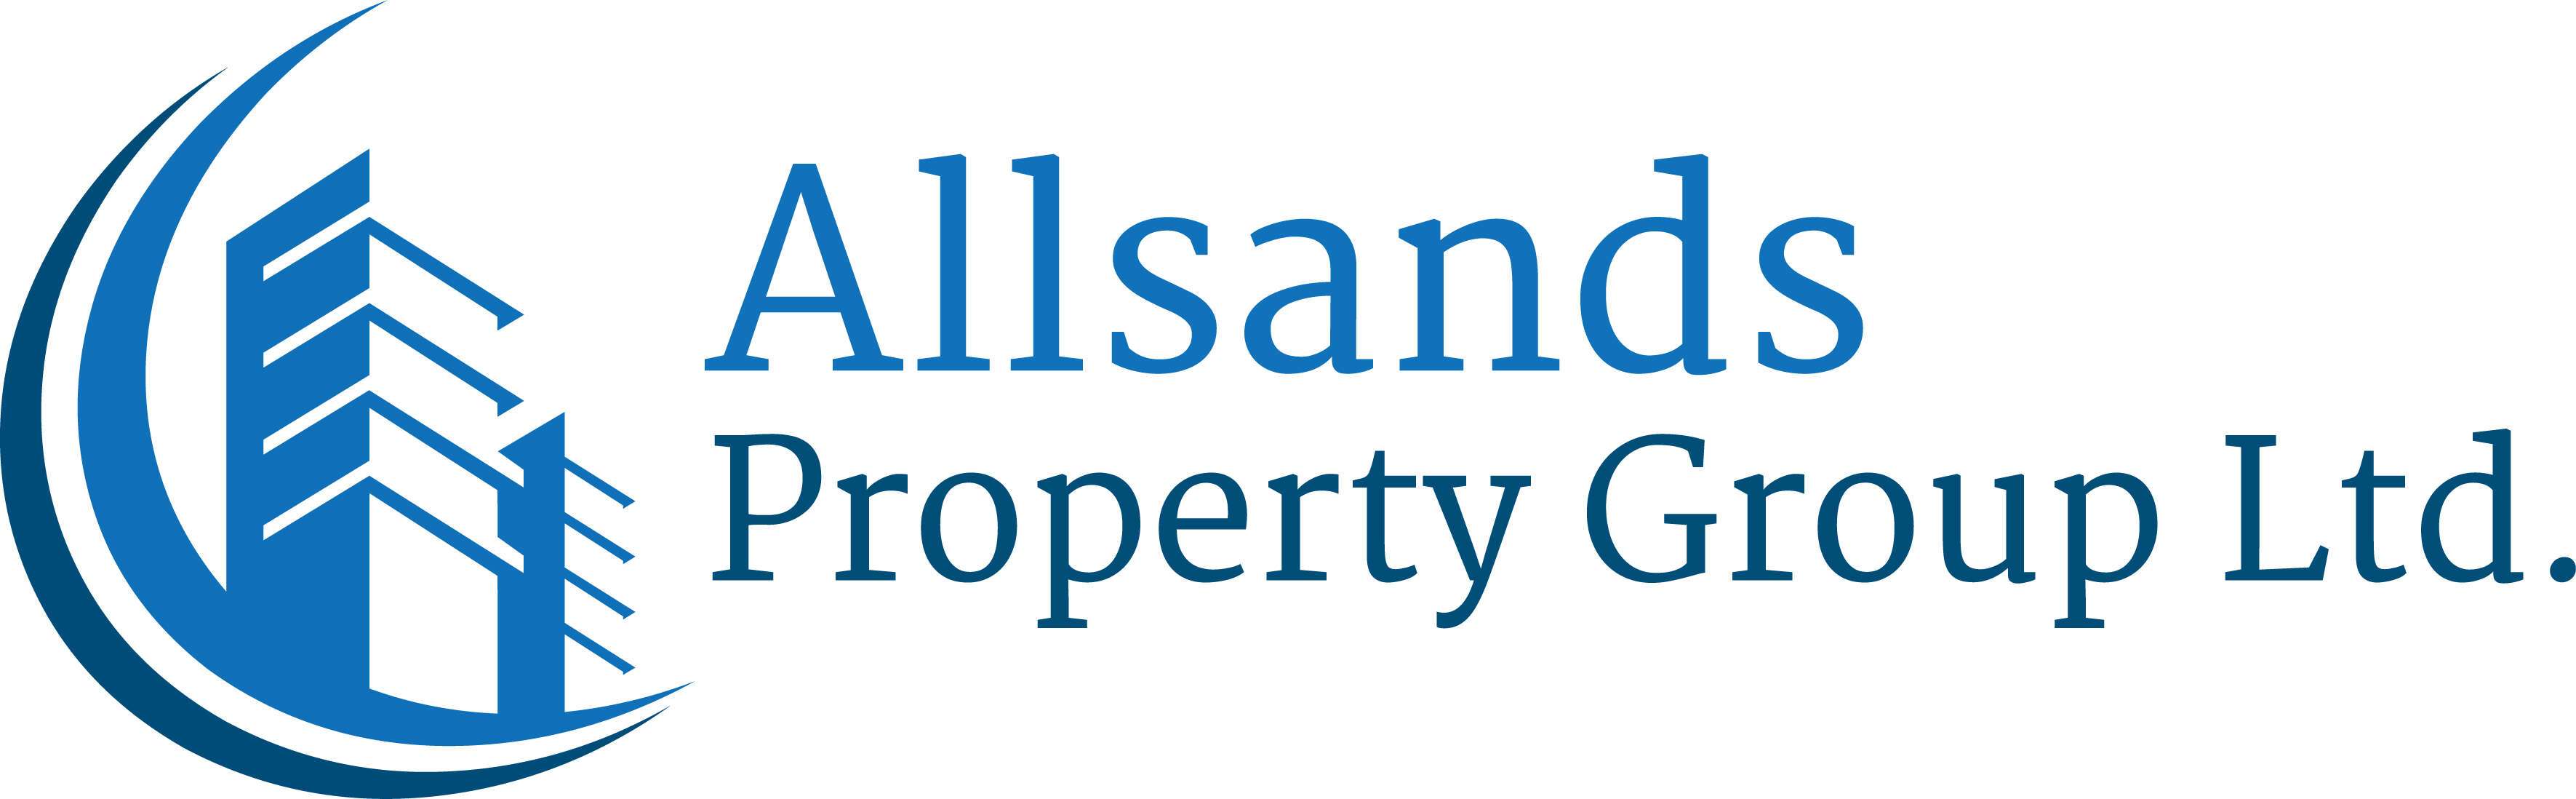 Allsands Property Group Ltd.